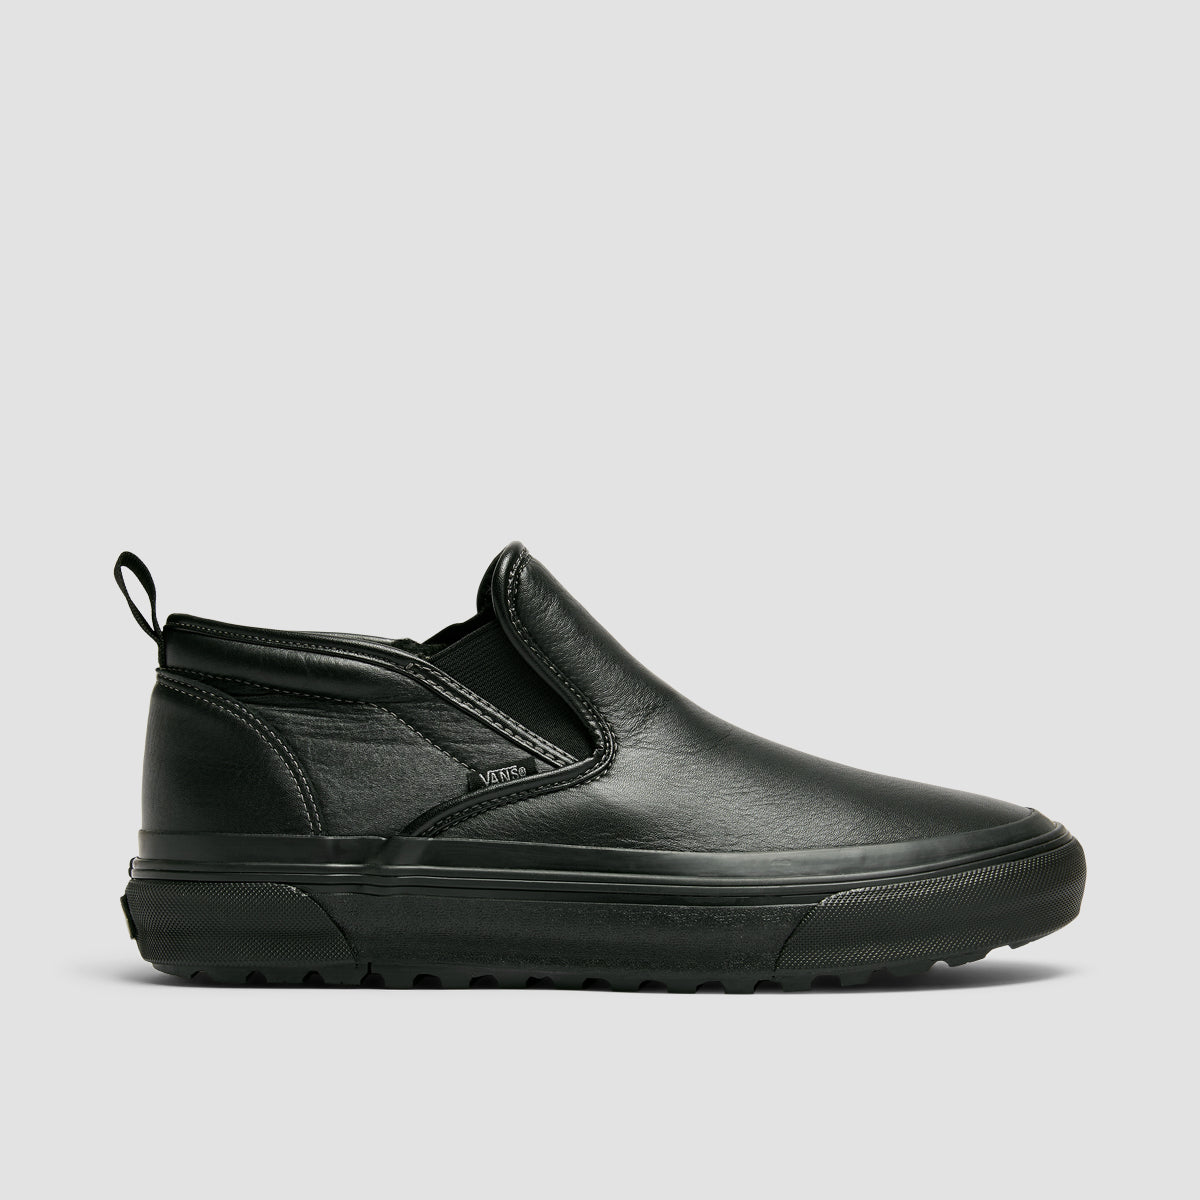 Vans Mid Slip MTE-1 Mid Top Slip On Shoes - Black Black